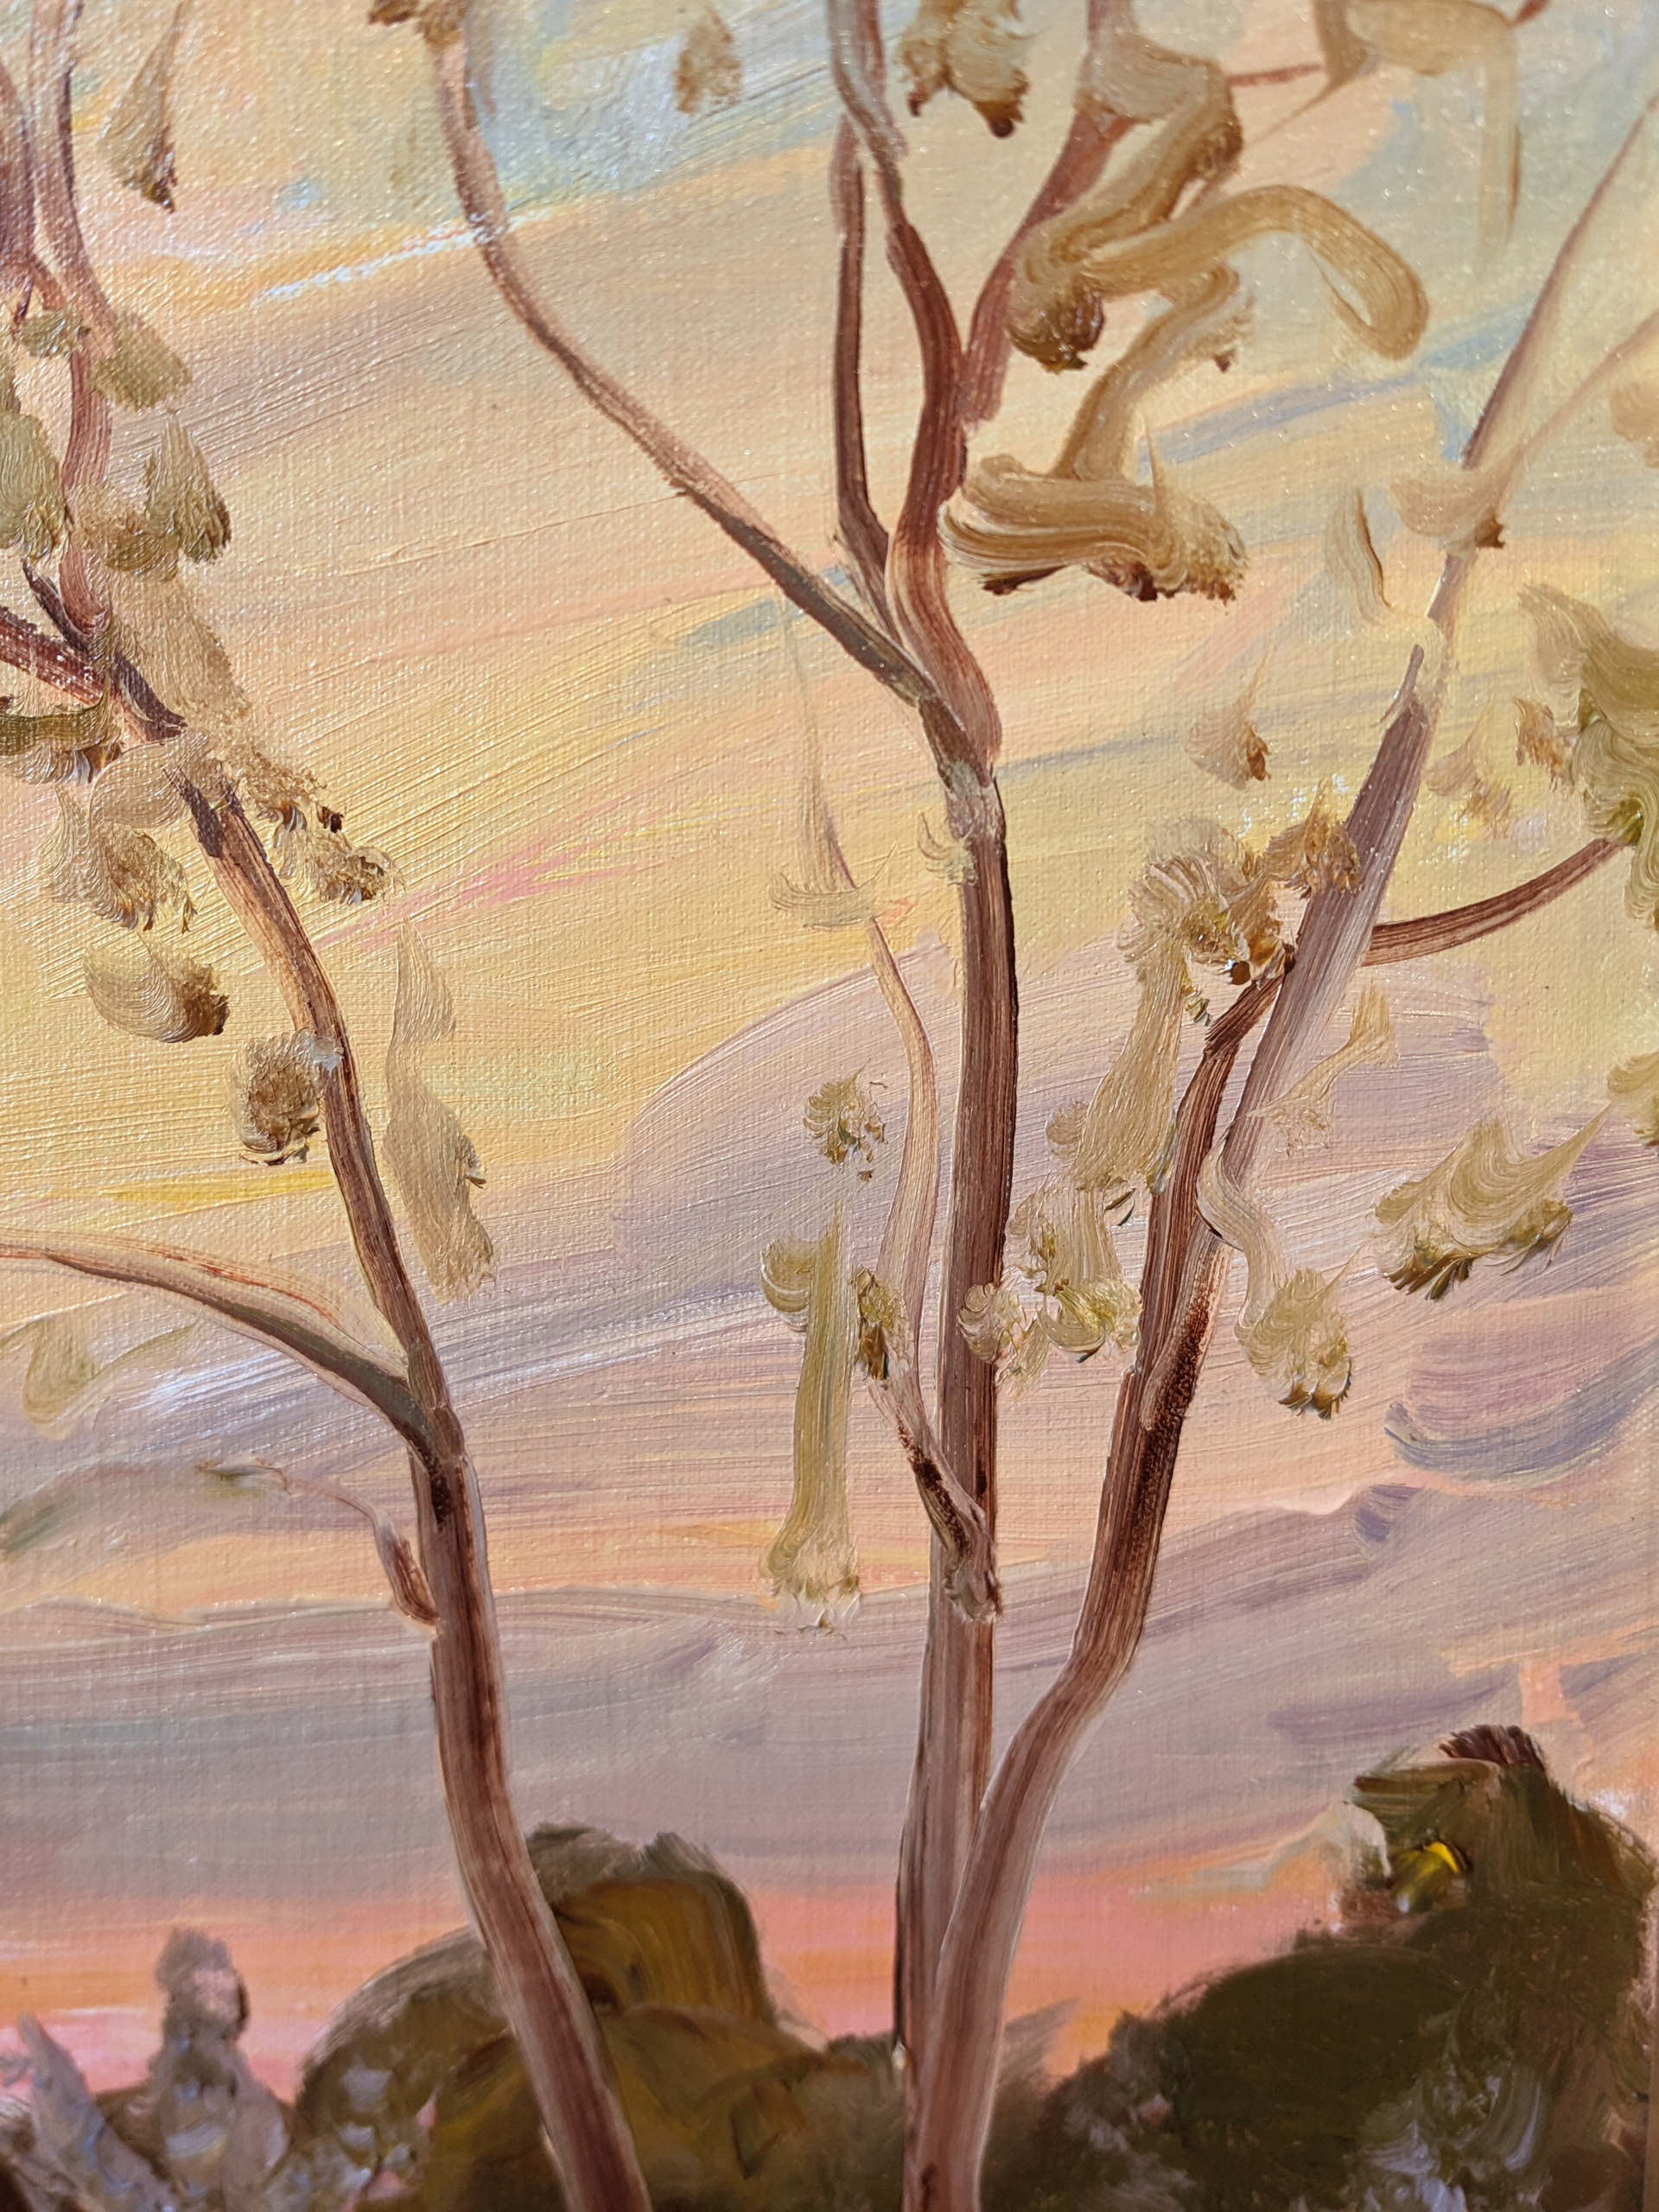 Elm and Apple Blossoms by Steve Gerhartz